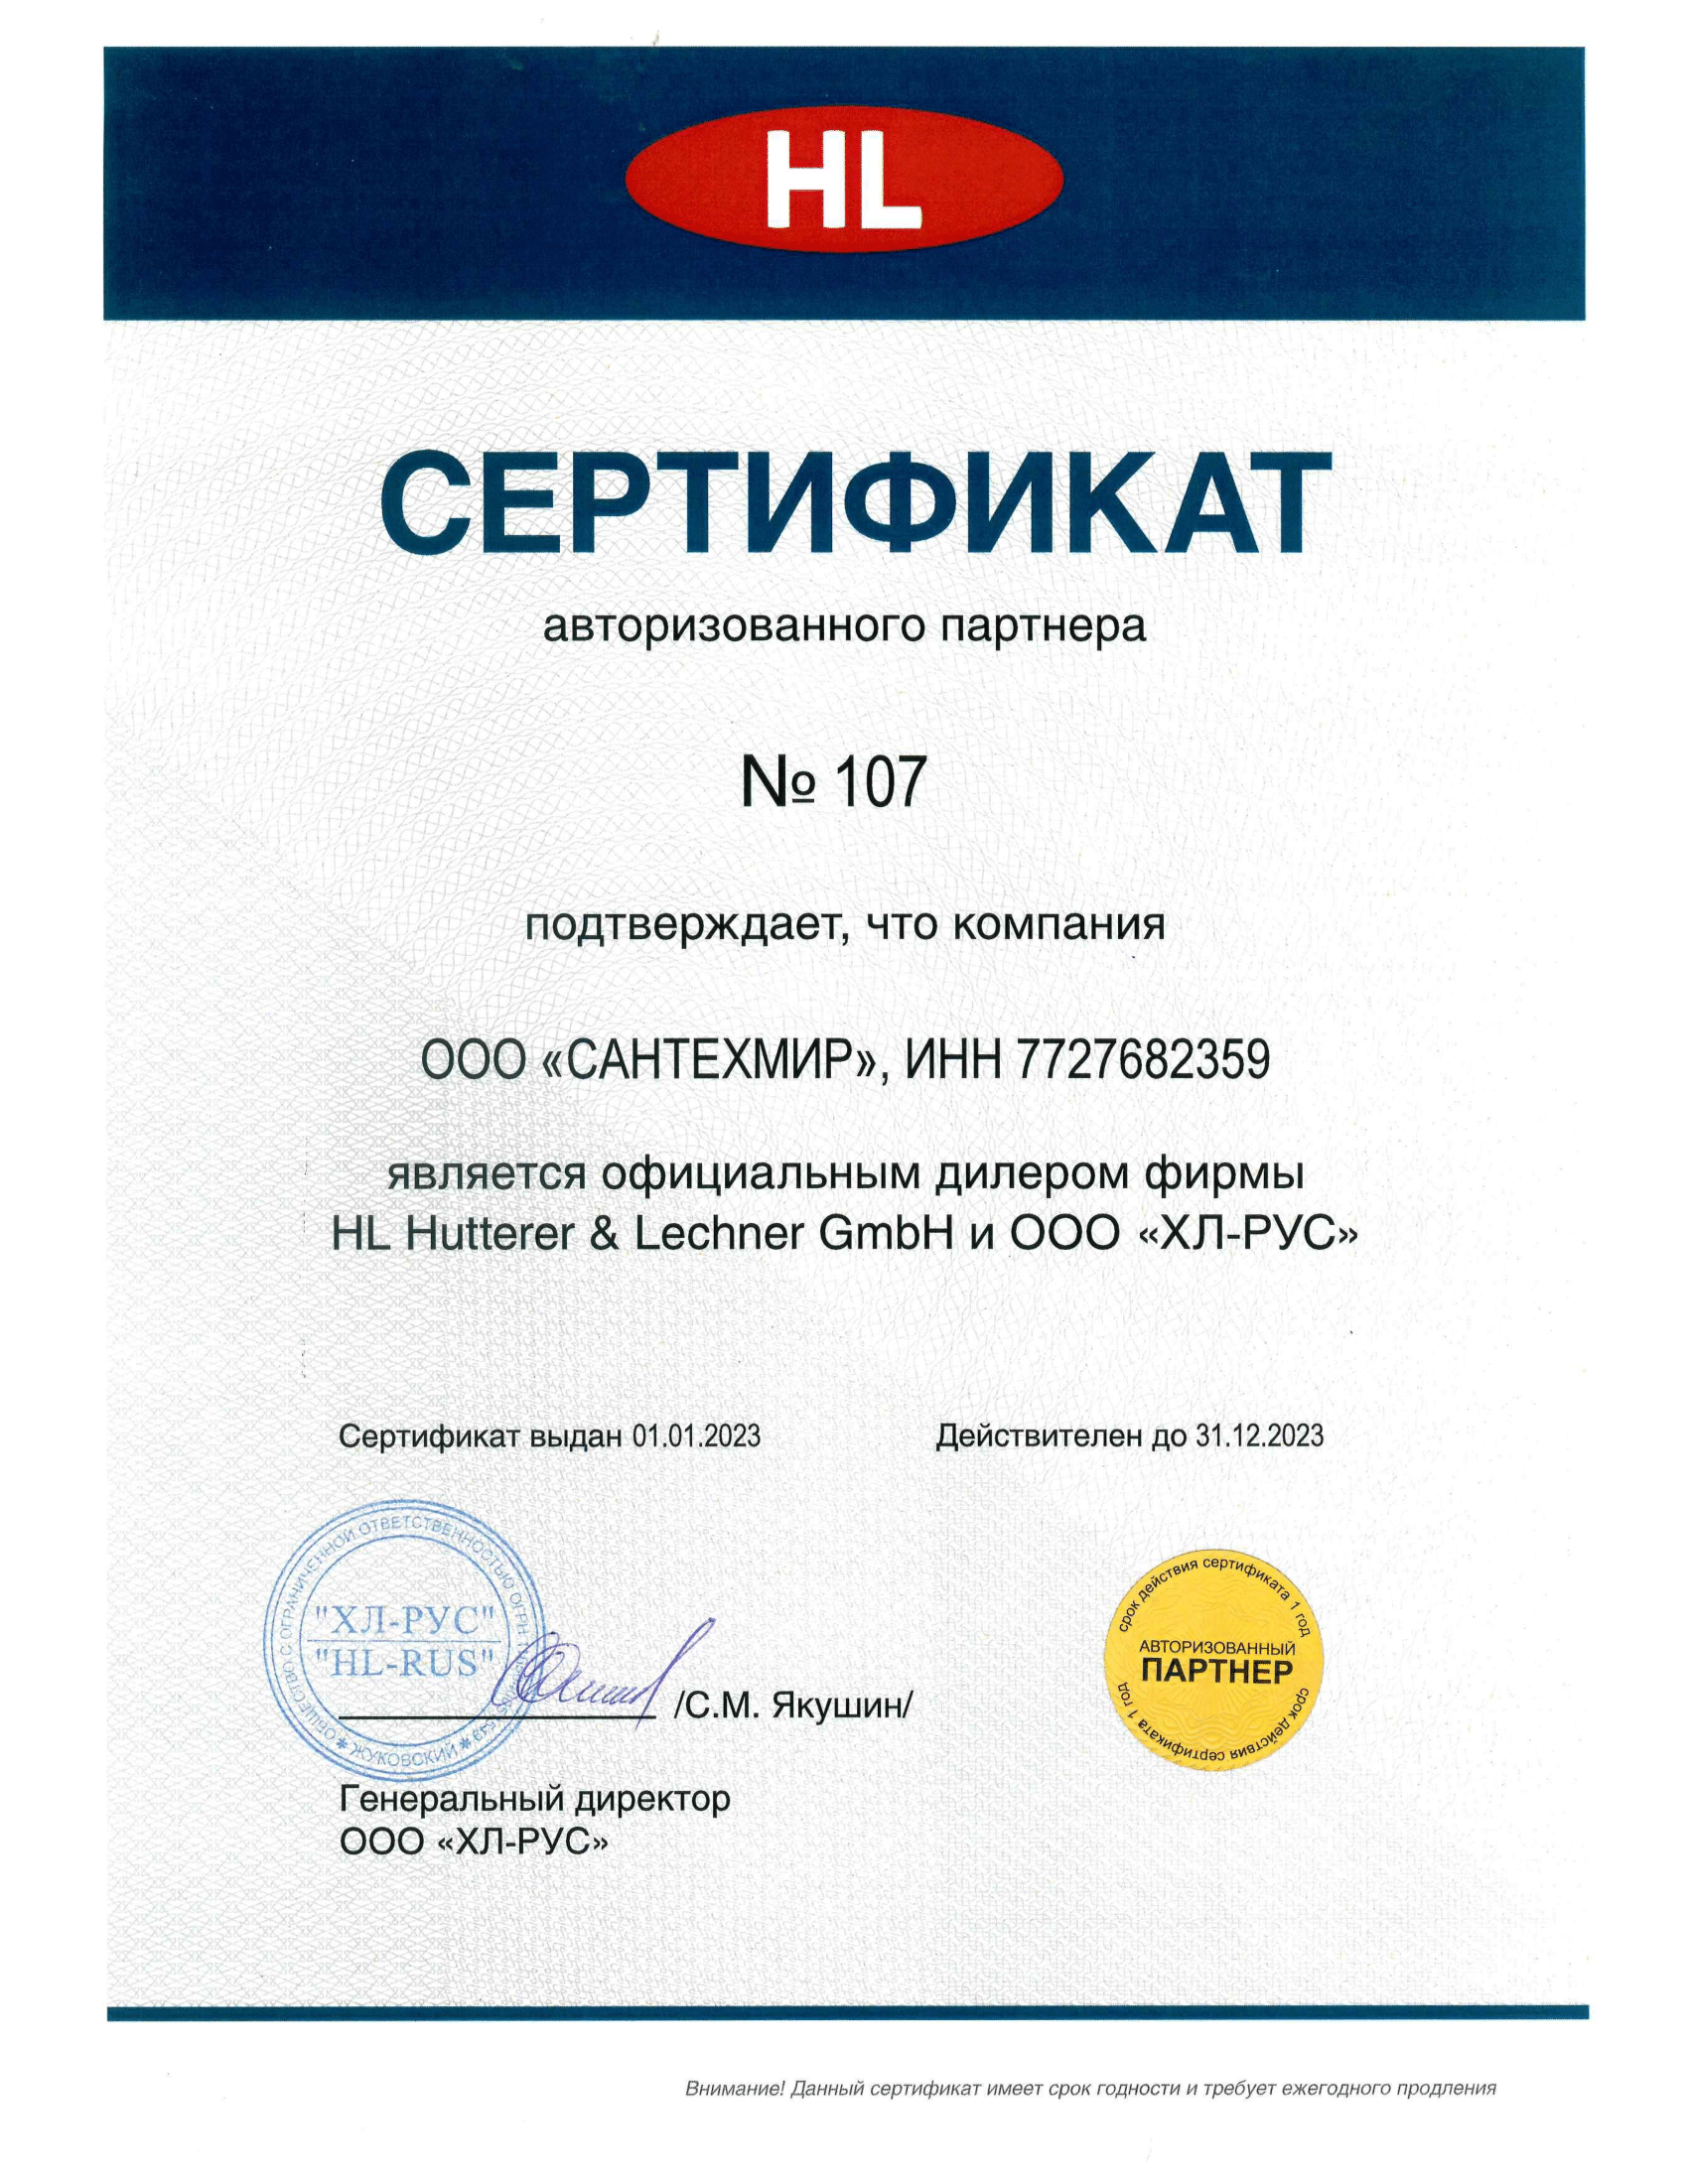 HL (сертификат за 2023 год)